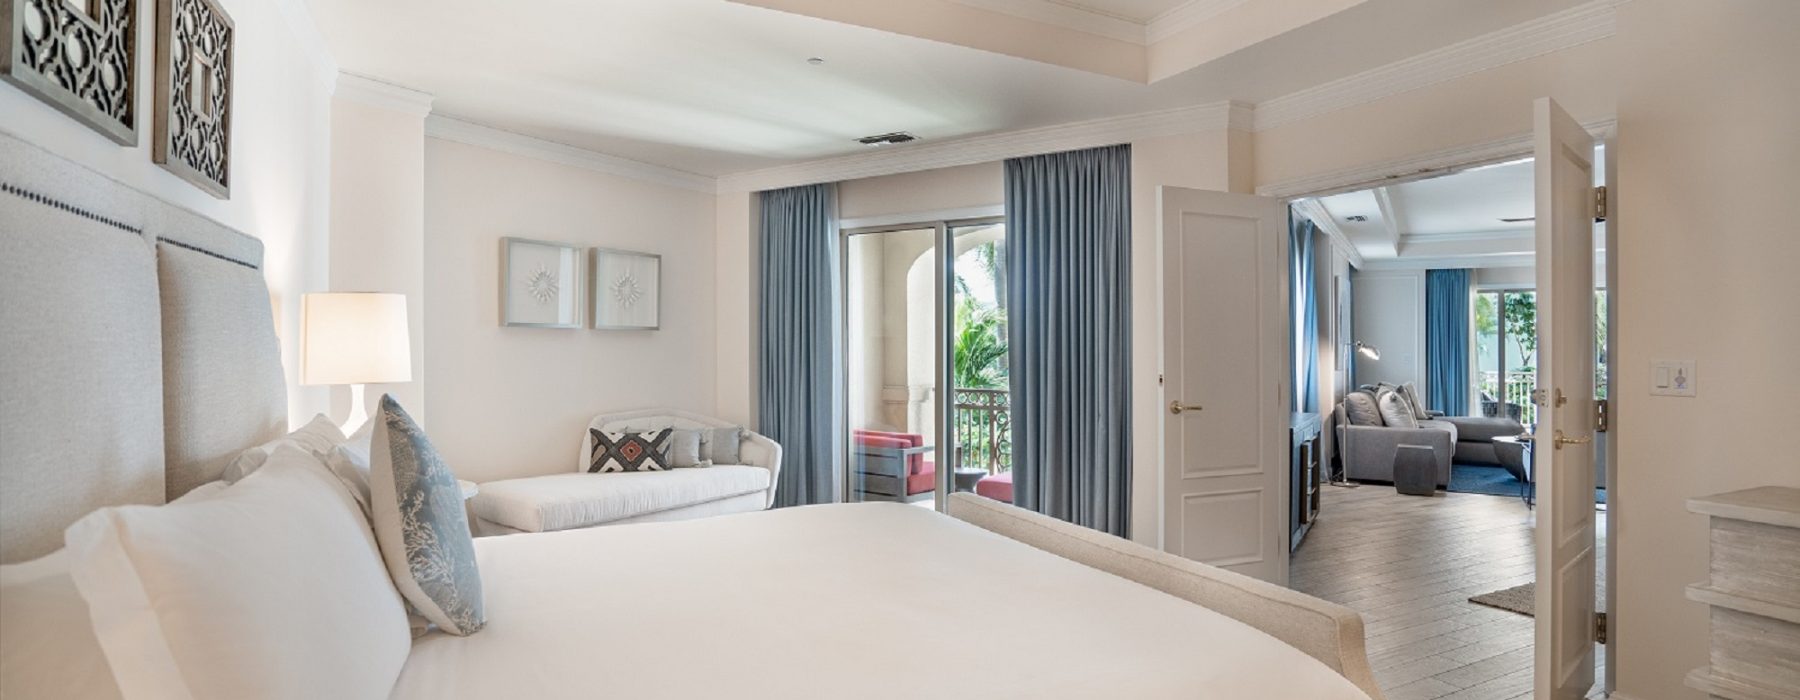 Residence 201 - The Ritz-Carlton, Grand Cayman 11 resized